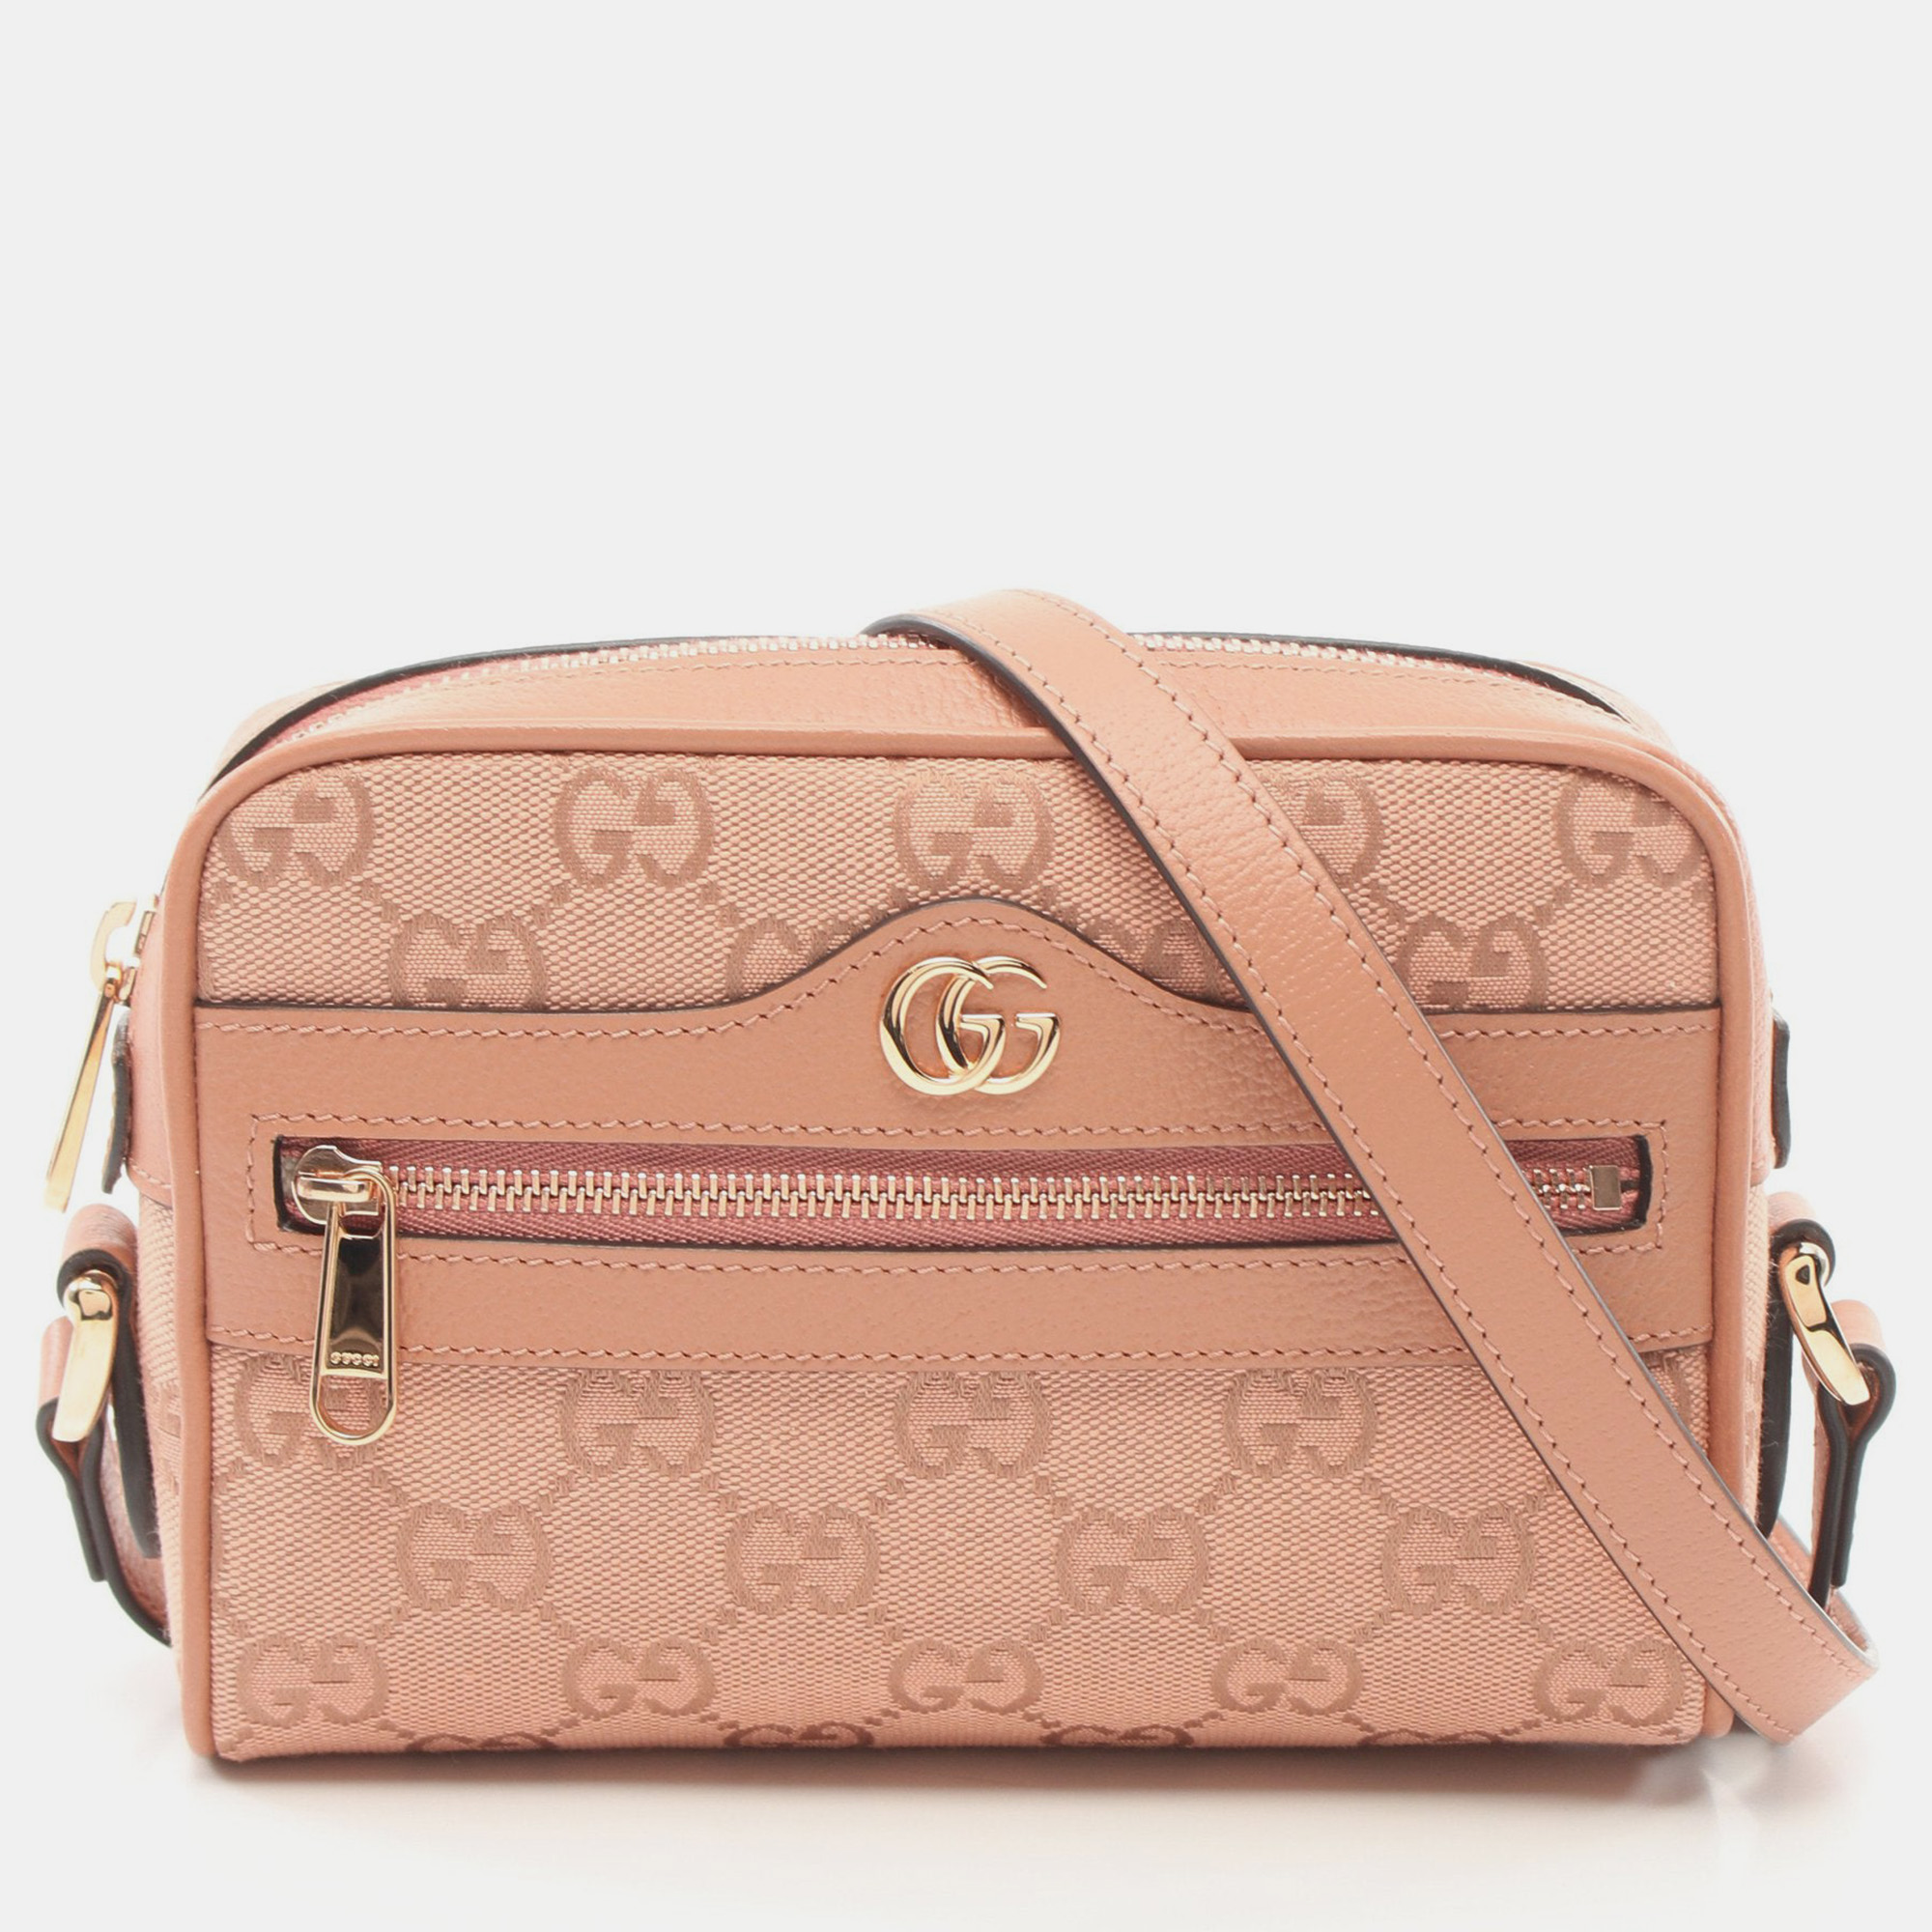 Gucci ophidia mini bag gg canvas shoulder bag canvas leather pink